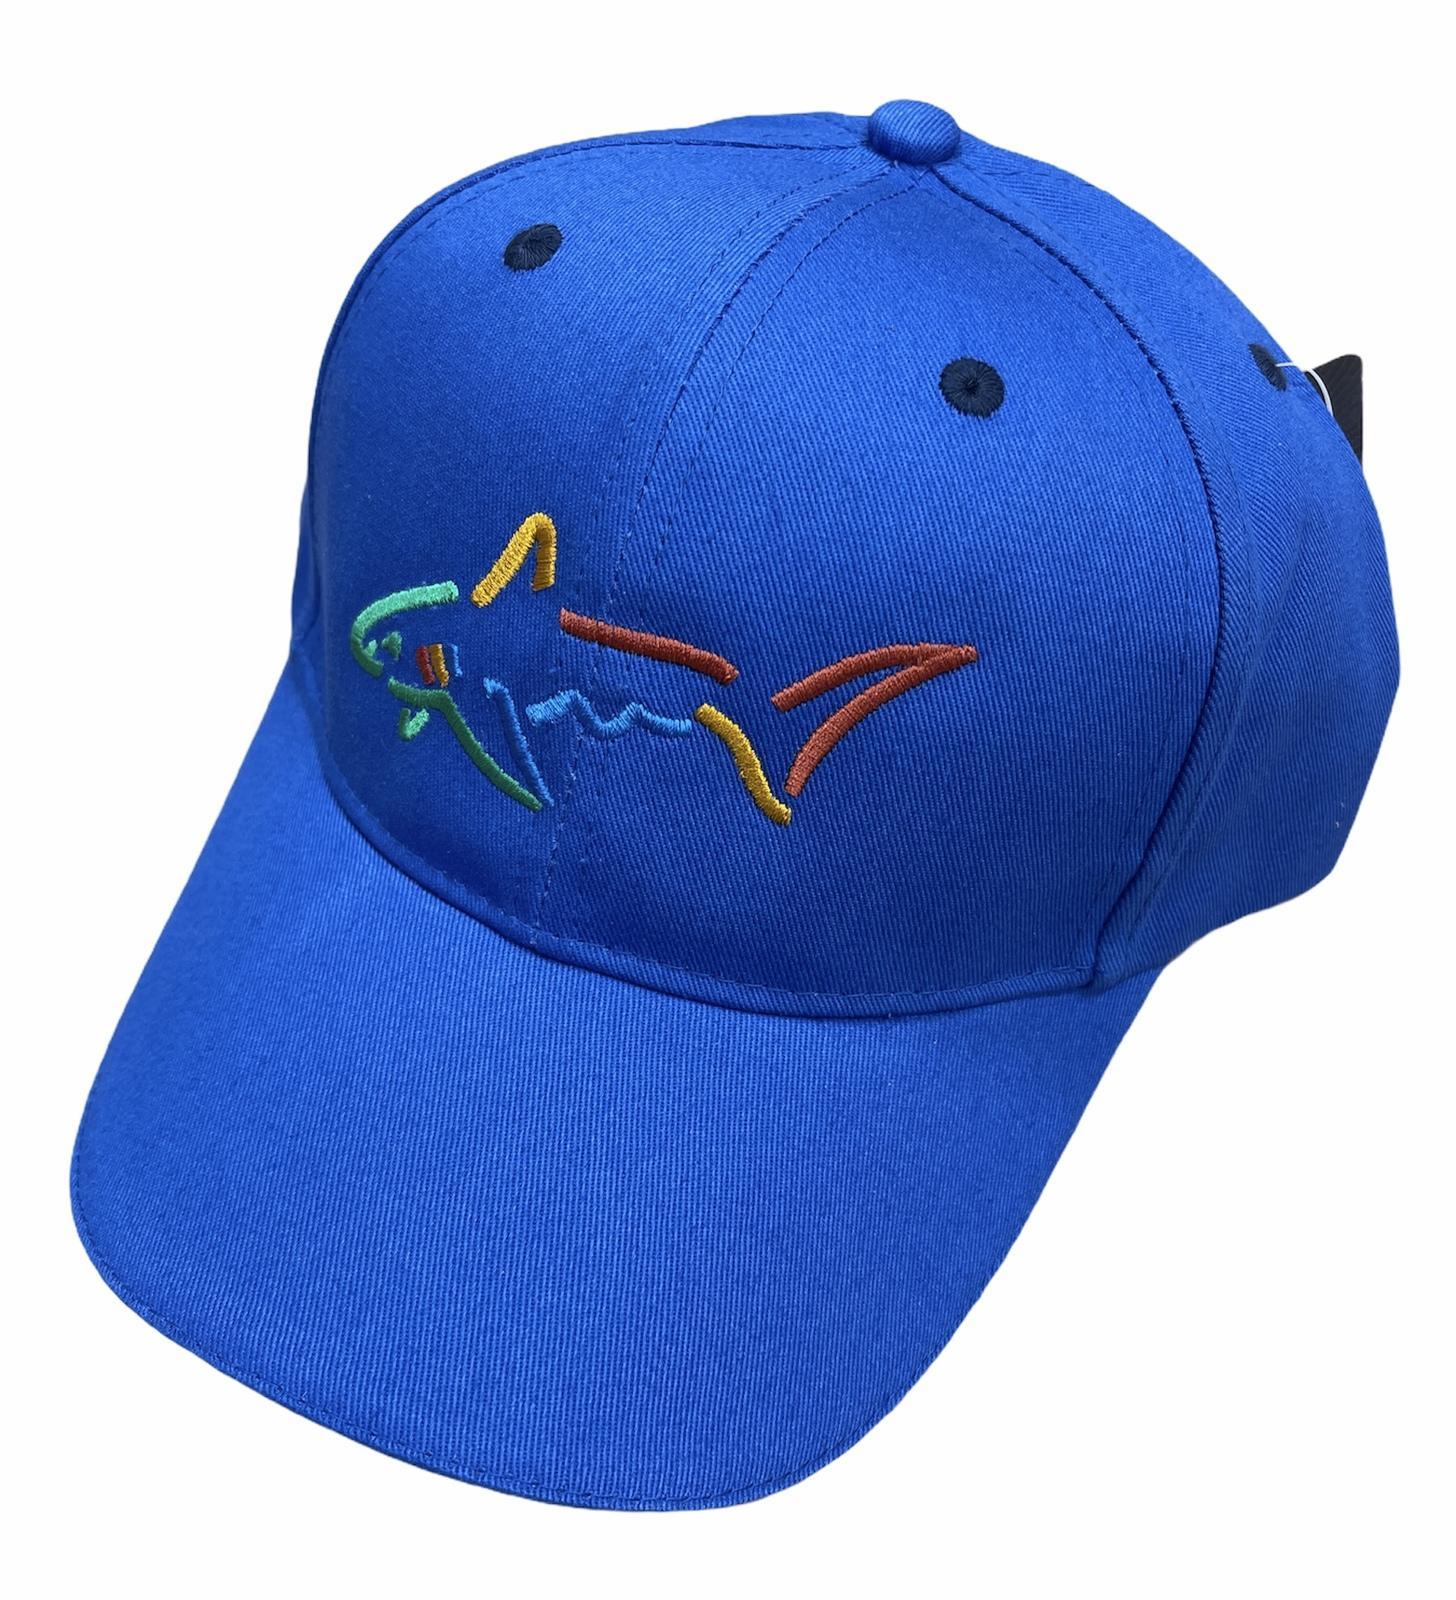 GREG NORMAN Cotton Golf Baseball Cap Hat Adjustable - One Size - Electric/Black/White